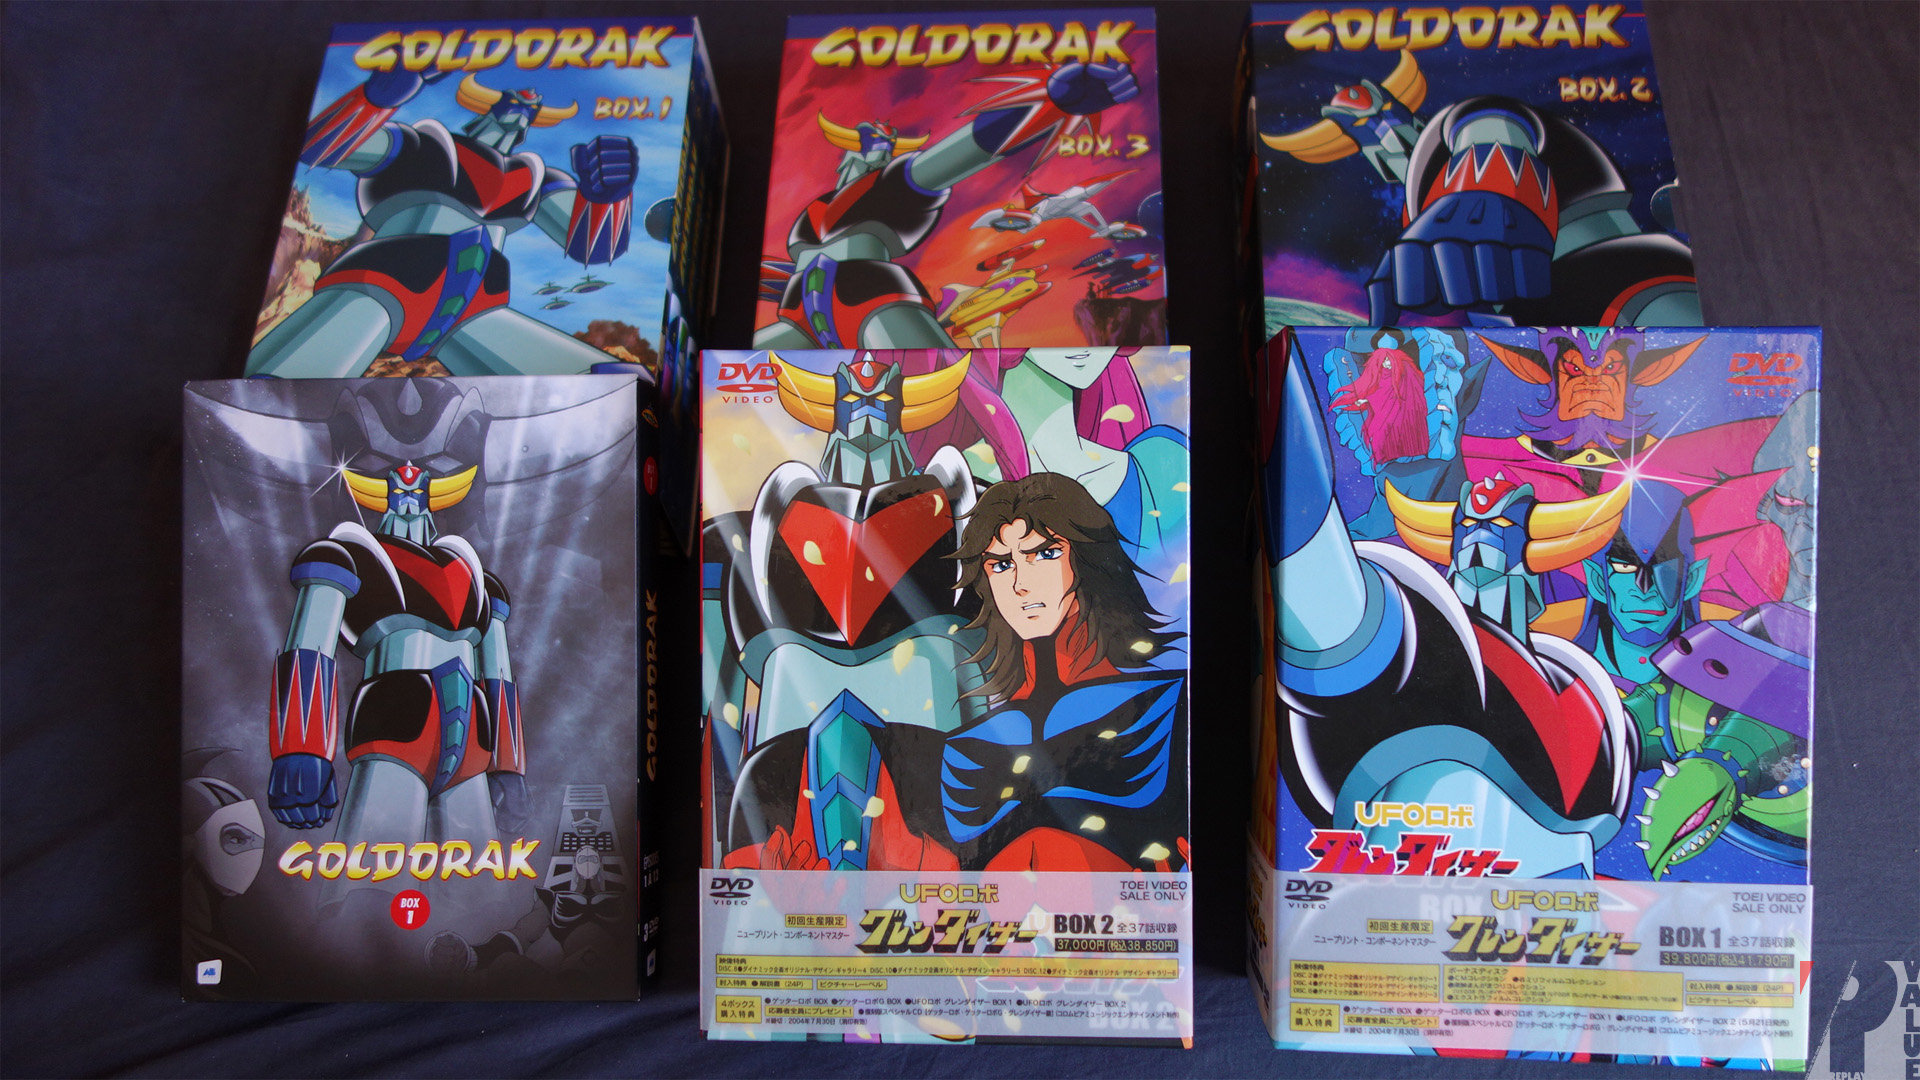 DVD GOLDORAK. Version Jap, version interdite et version à chier